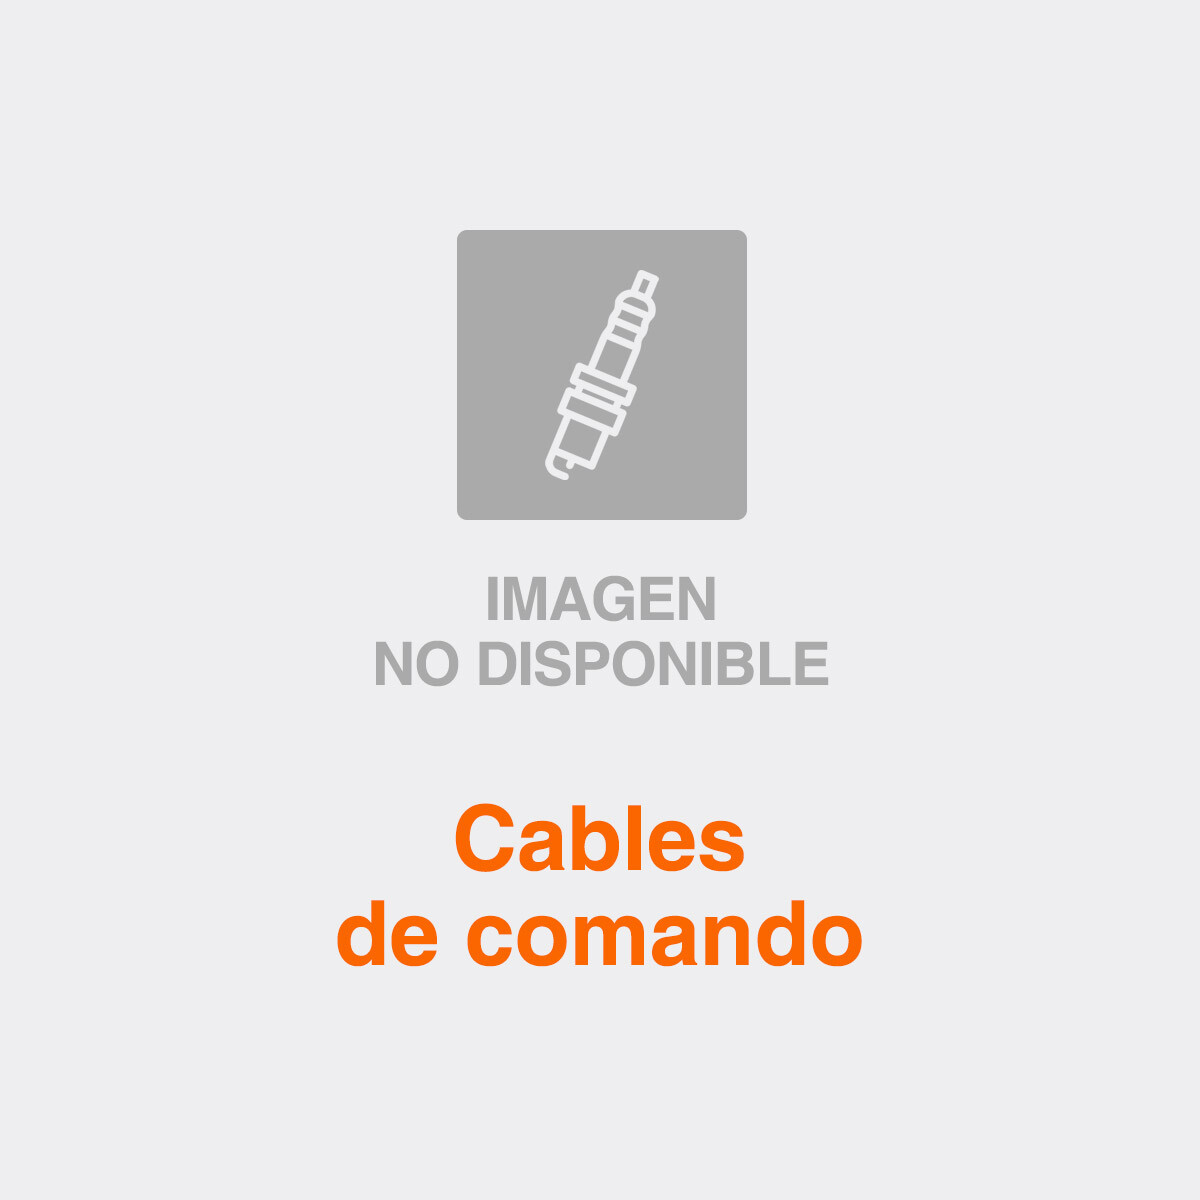 CABLE DE COMANDO GEELY CABLE PUERTA DEL.IZQ. - 